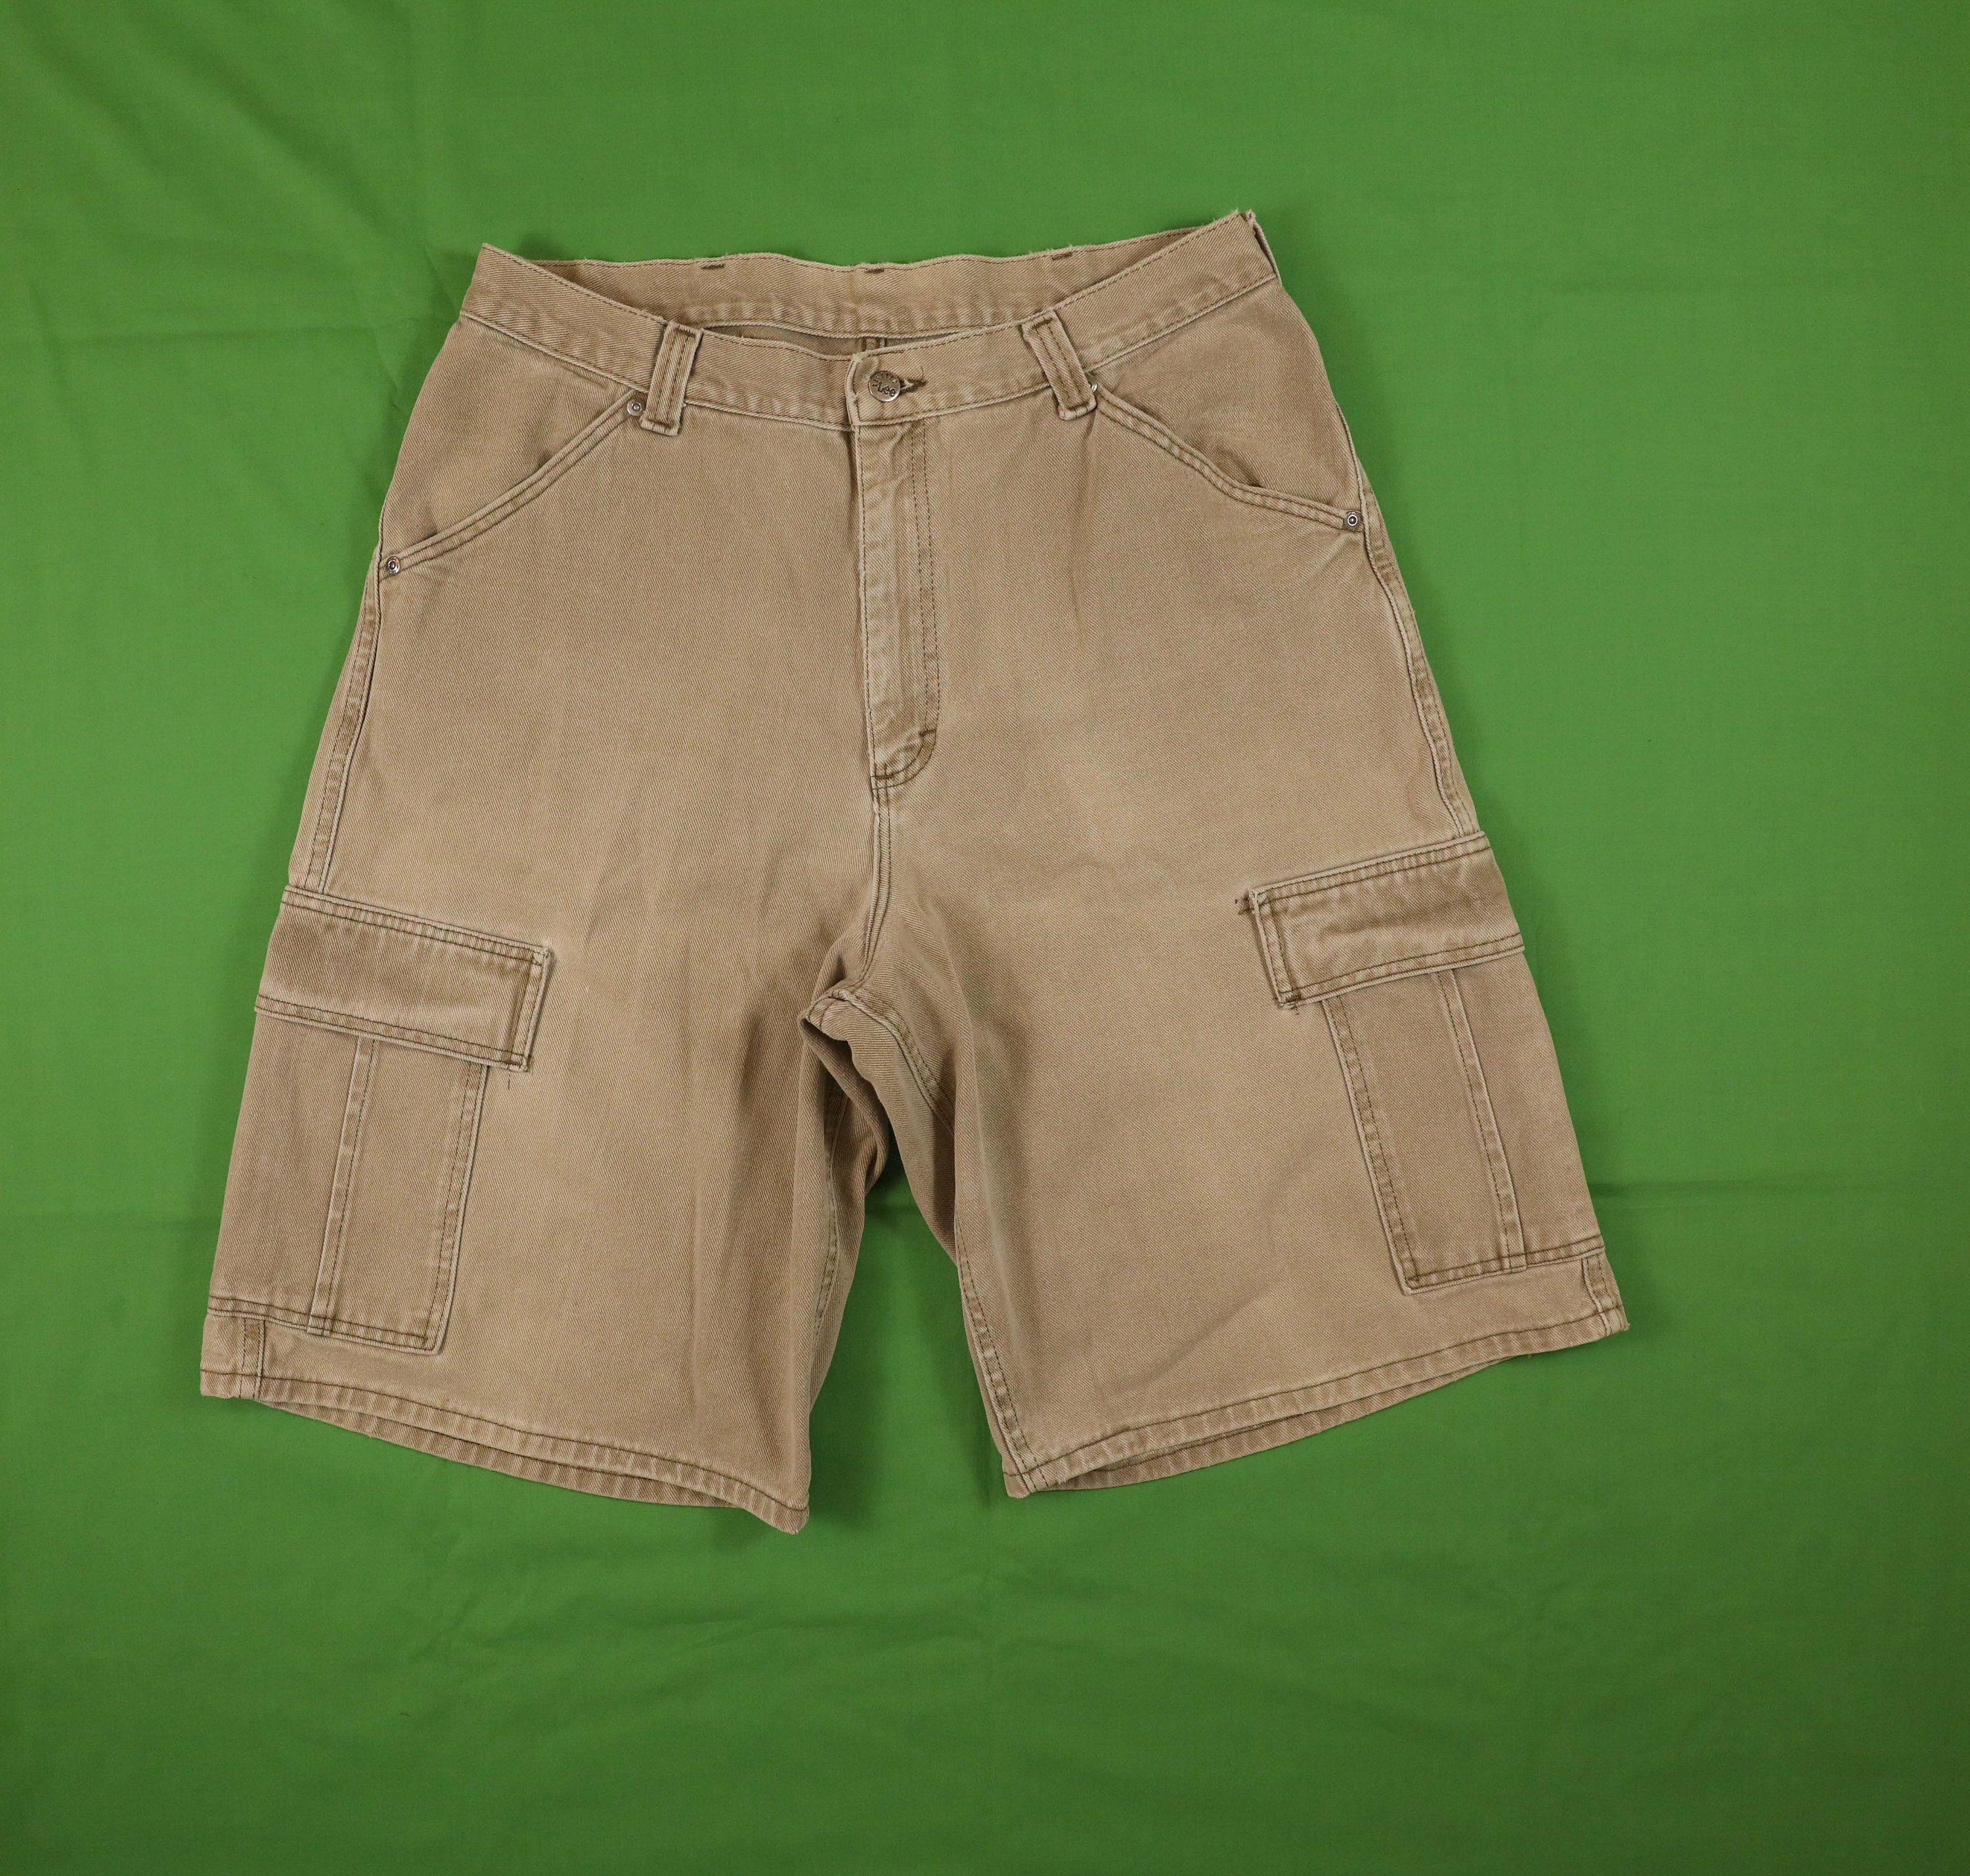 Orvis Orvis cargo shorts Gray size 34 mens euc